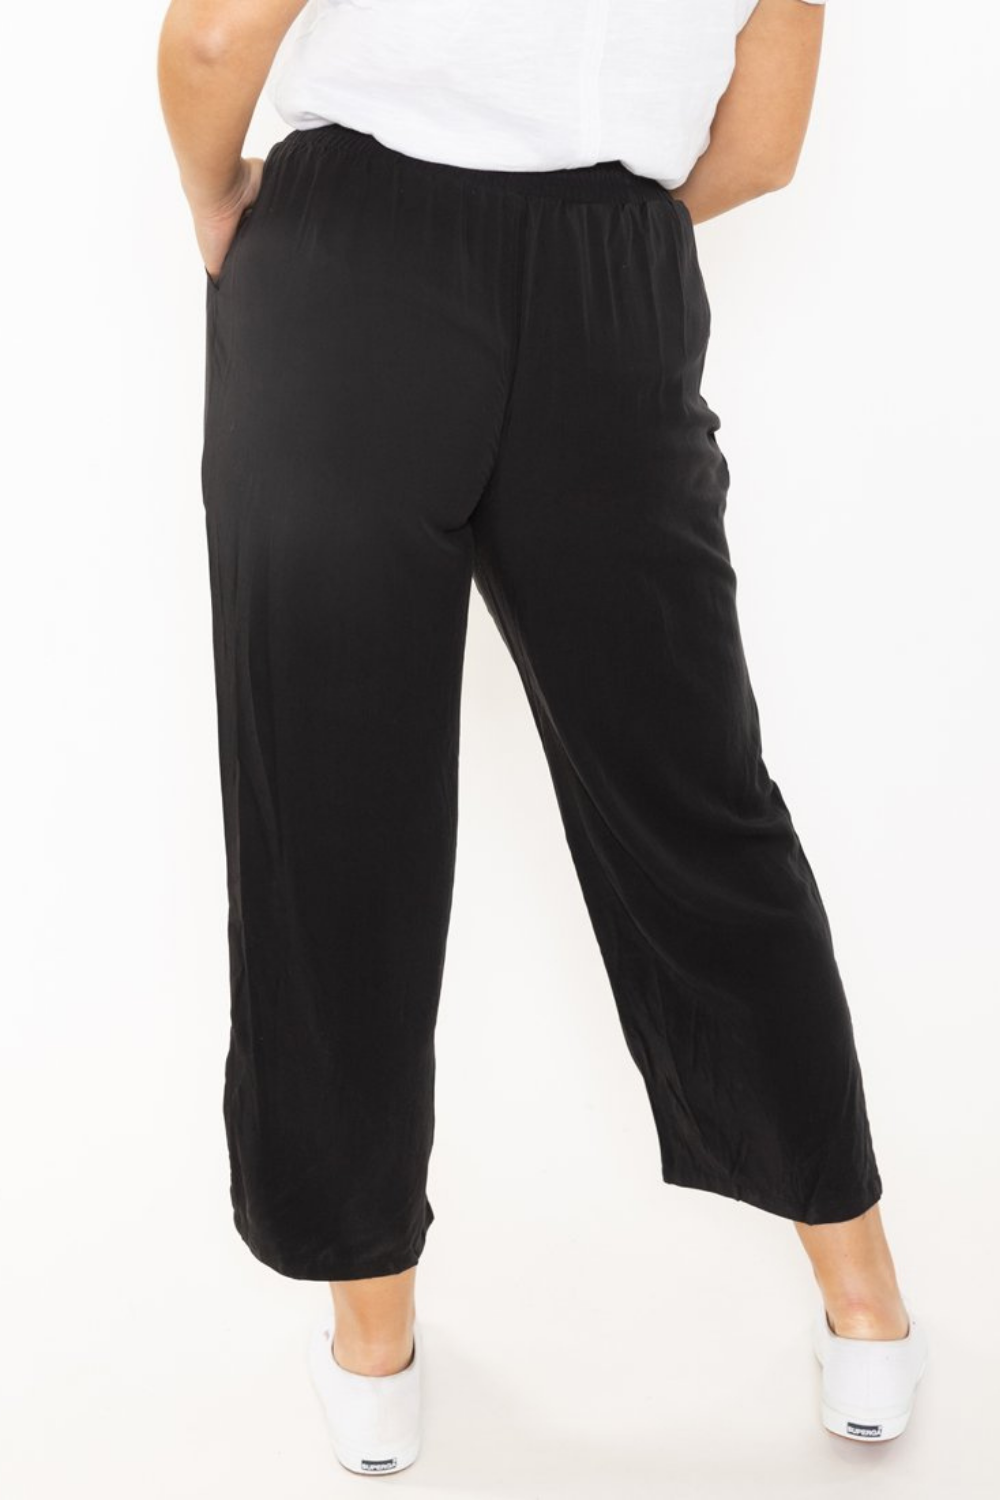 Satin Harem Pants 2 Side Slit / Cut Women Wear Ankle Split Pantaloons  Trouser | eBay